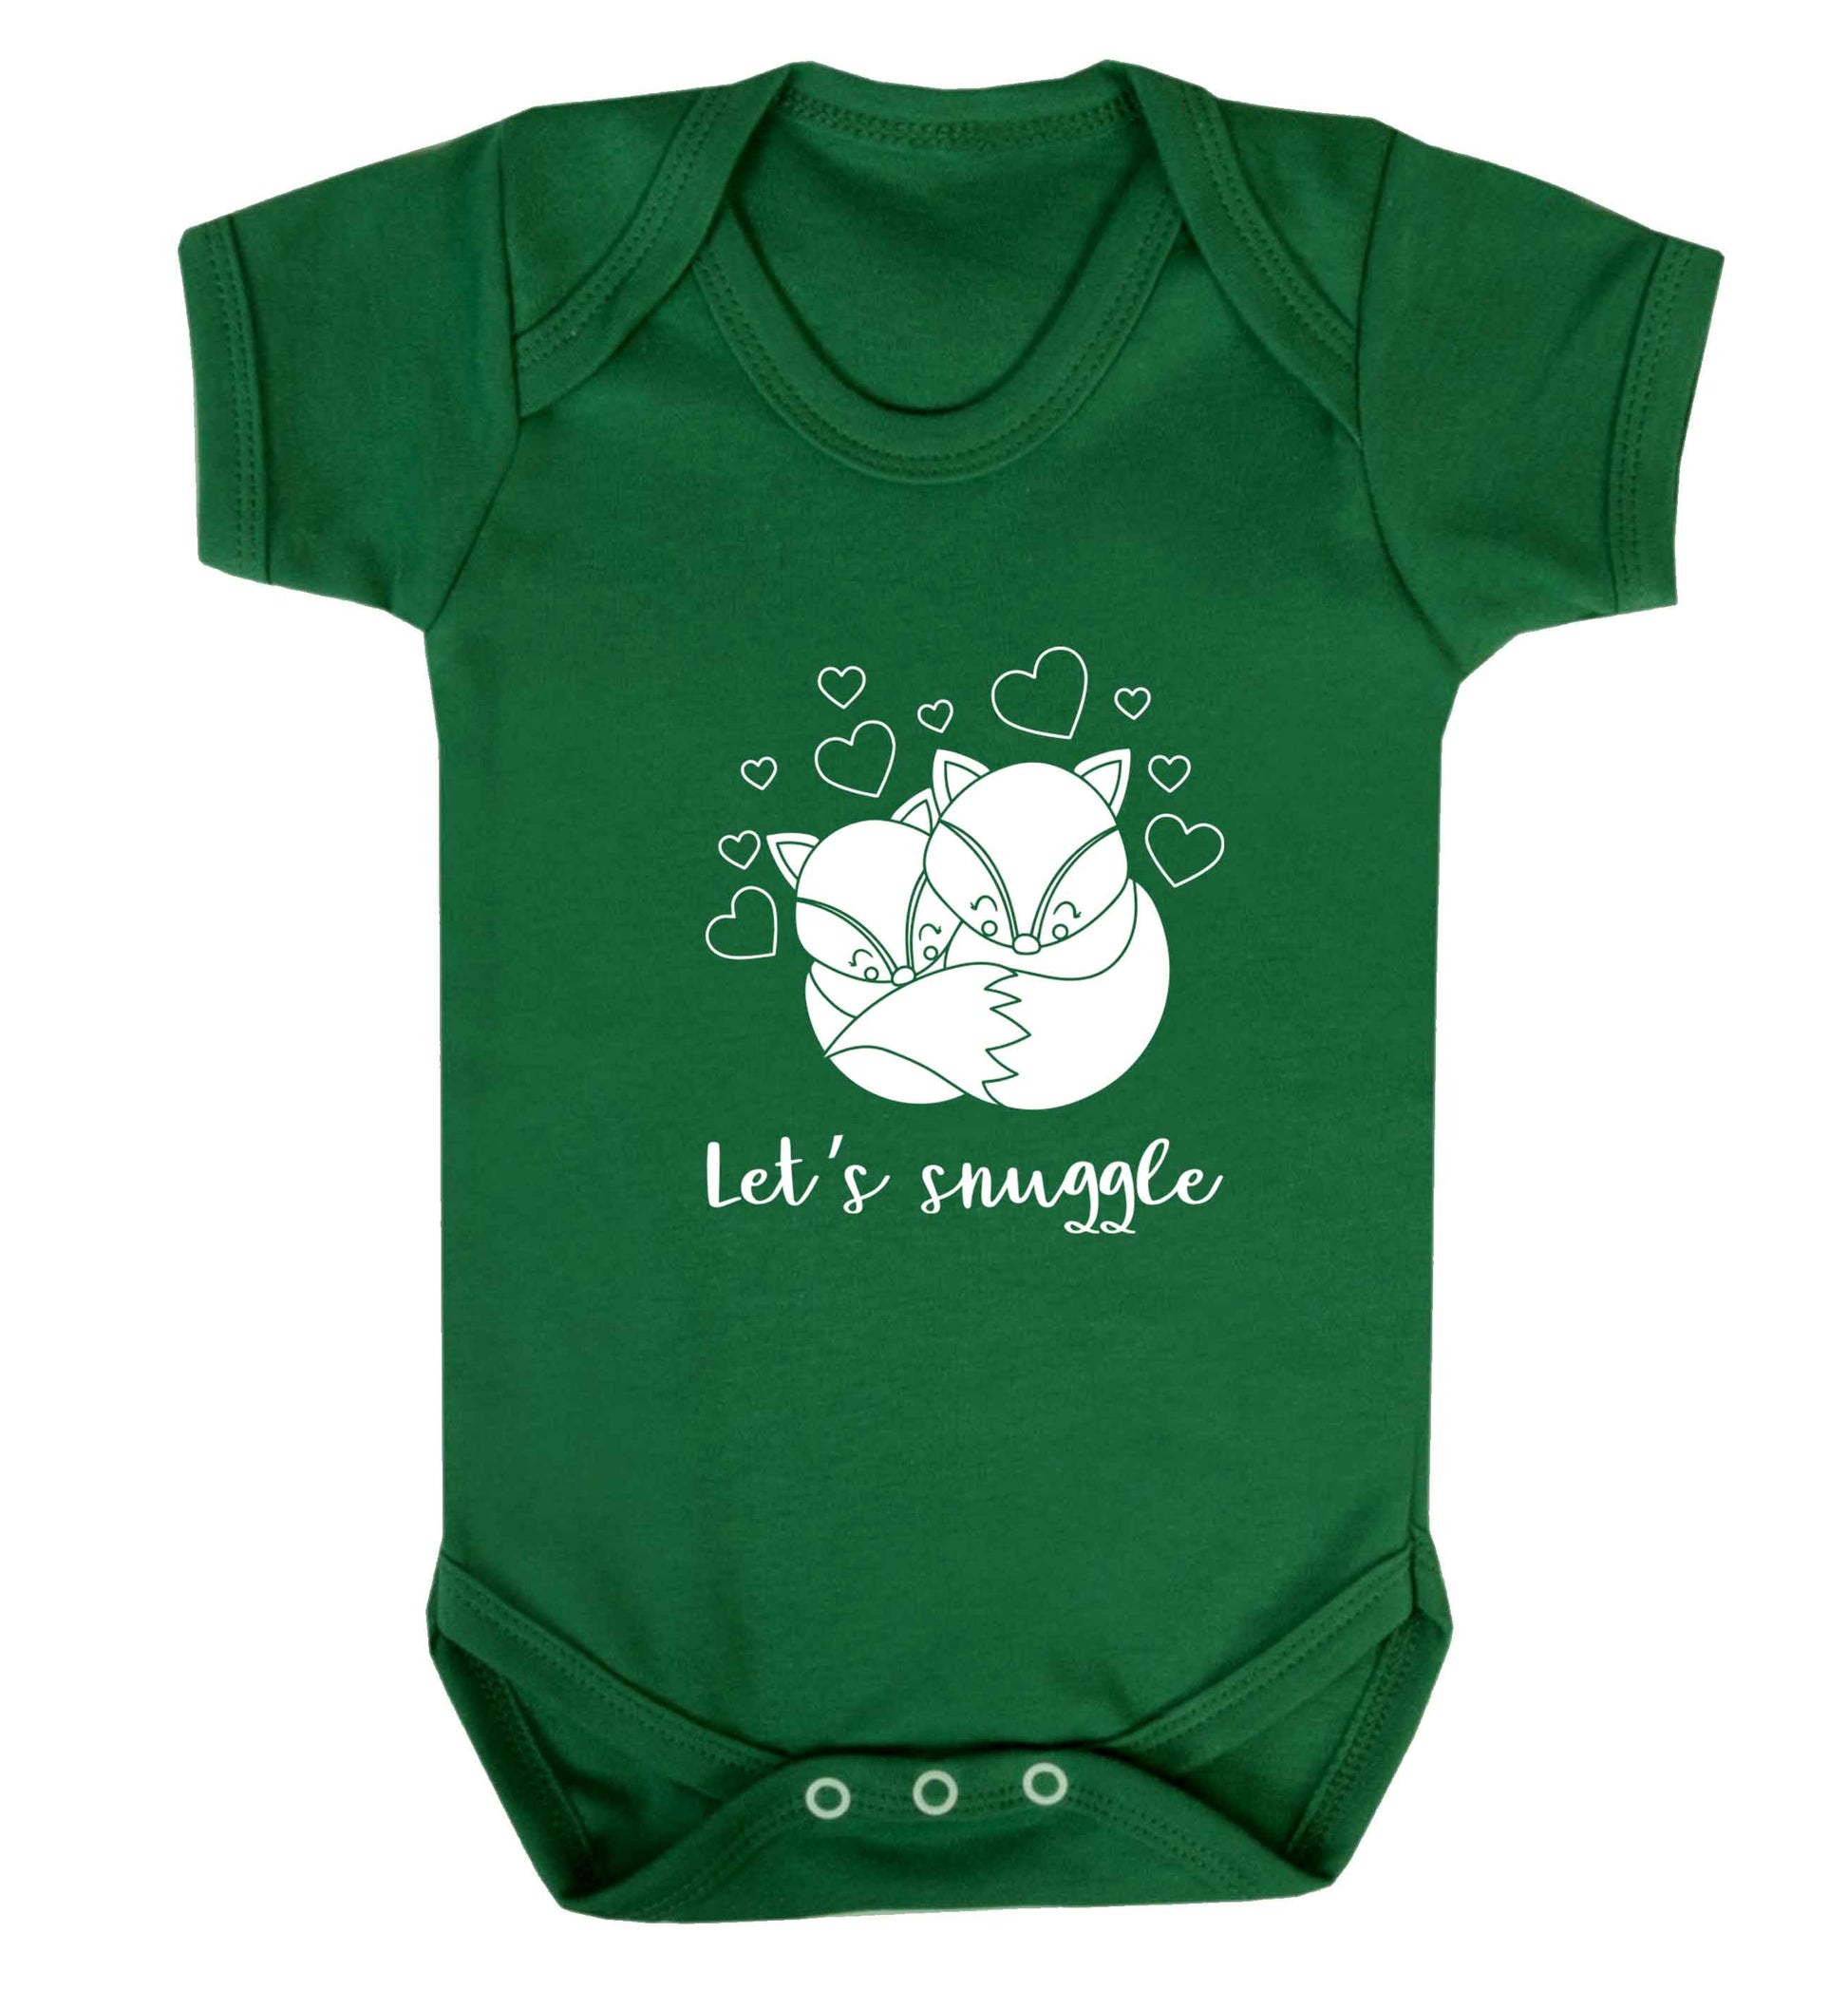 Let's snuggle baby vest green 18-24 months